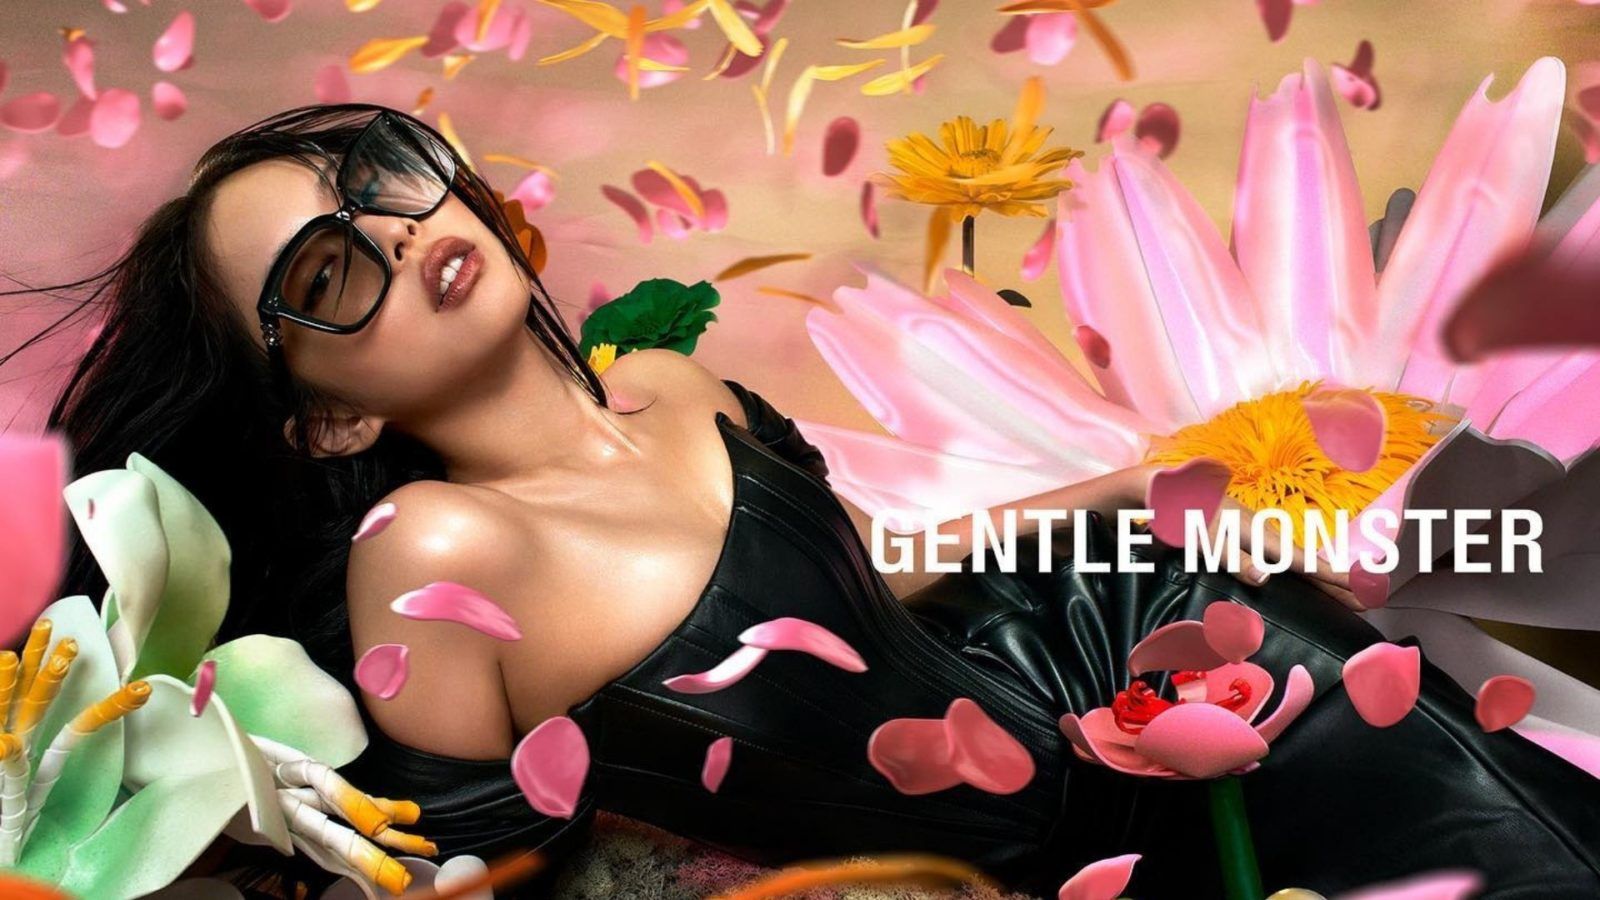 Jentle Garden collection Jennie X Gentle Monster @gentlemonster #블랙핑크 #지수  #제니 #로저 #리사 #jennie #jenniestyle #lisa #lisastyle #jisoostyle…